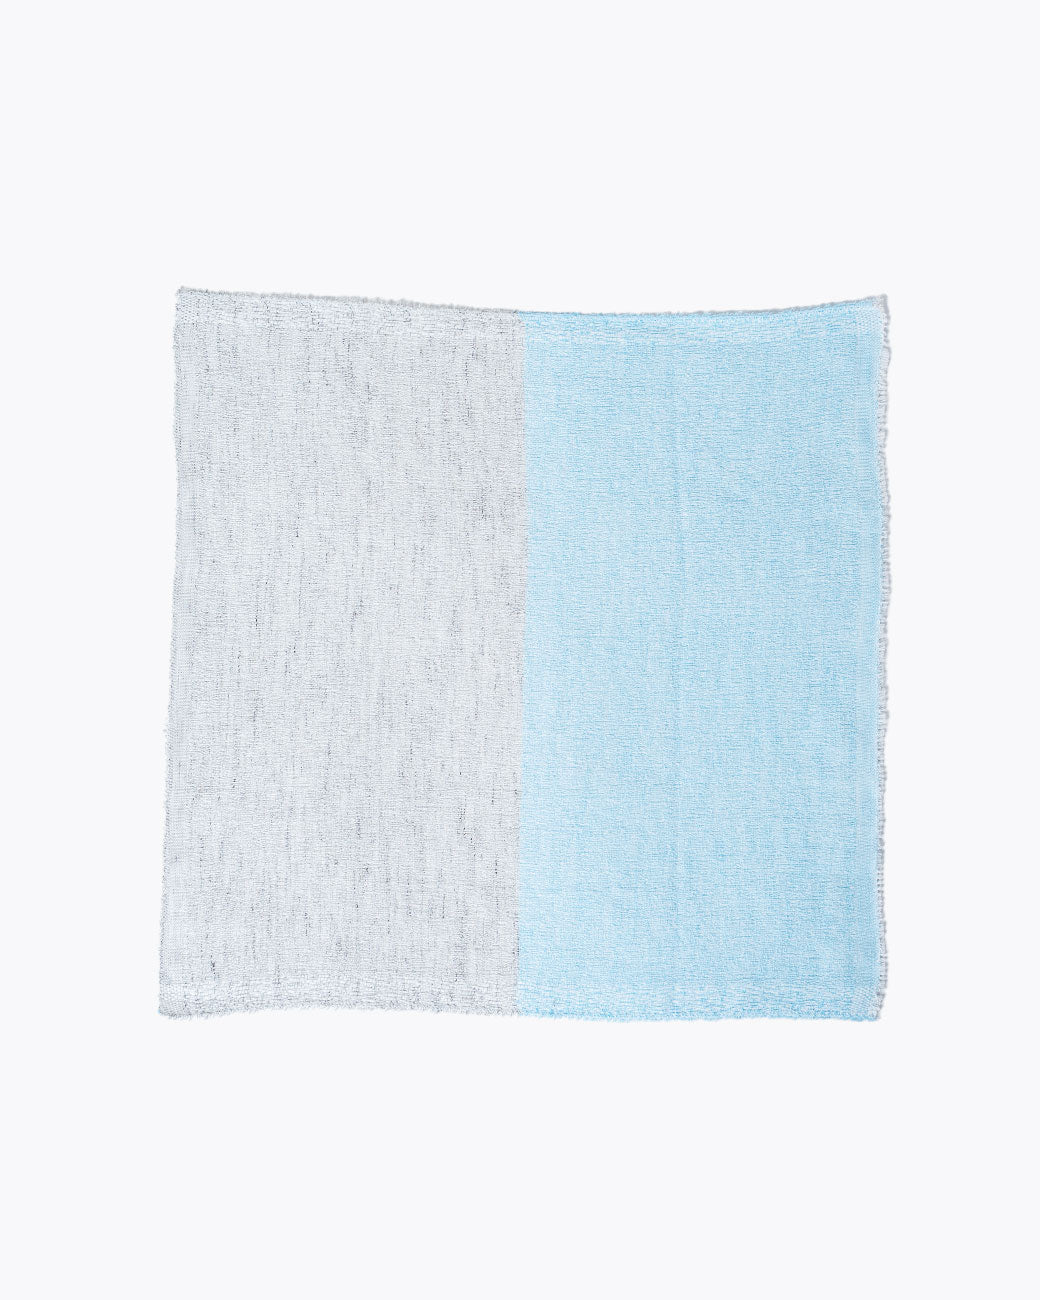 Japanese Shukin gauze hand towel, half blue and half gray.